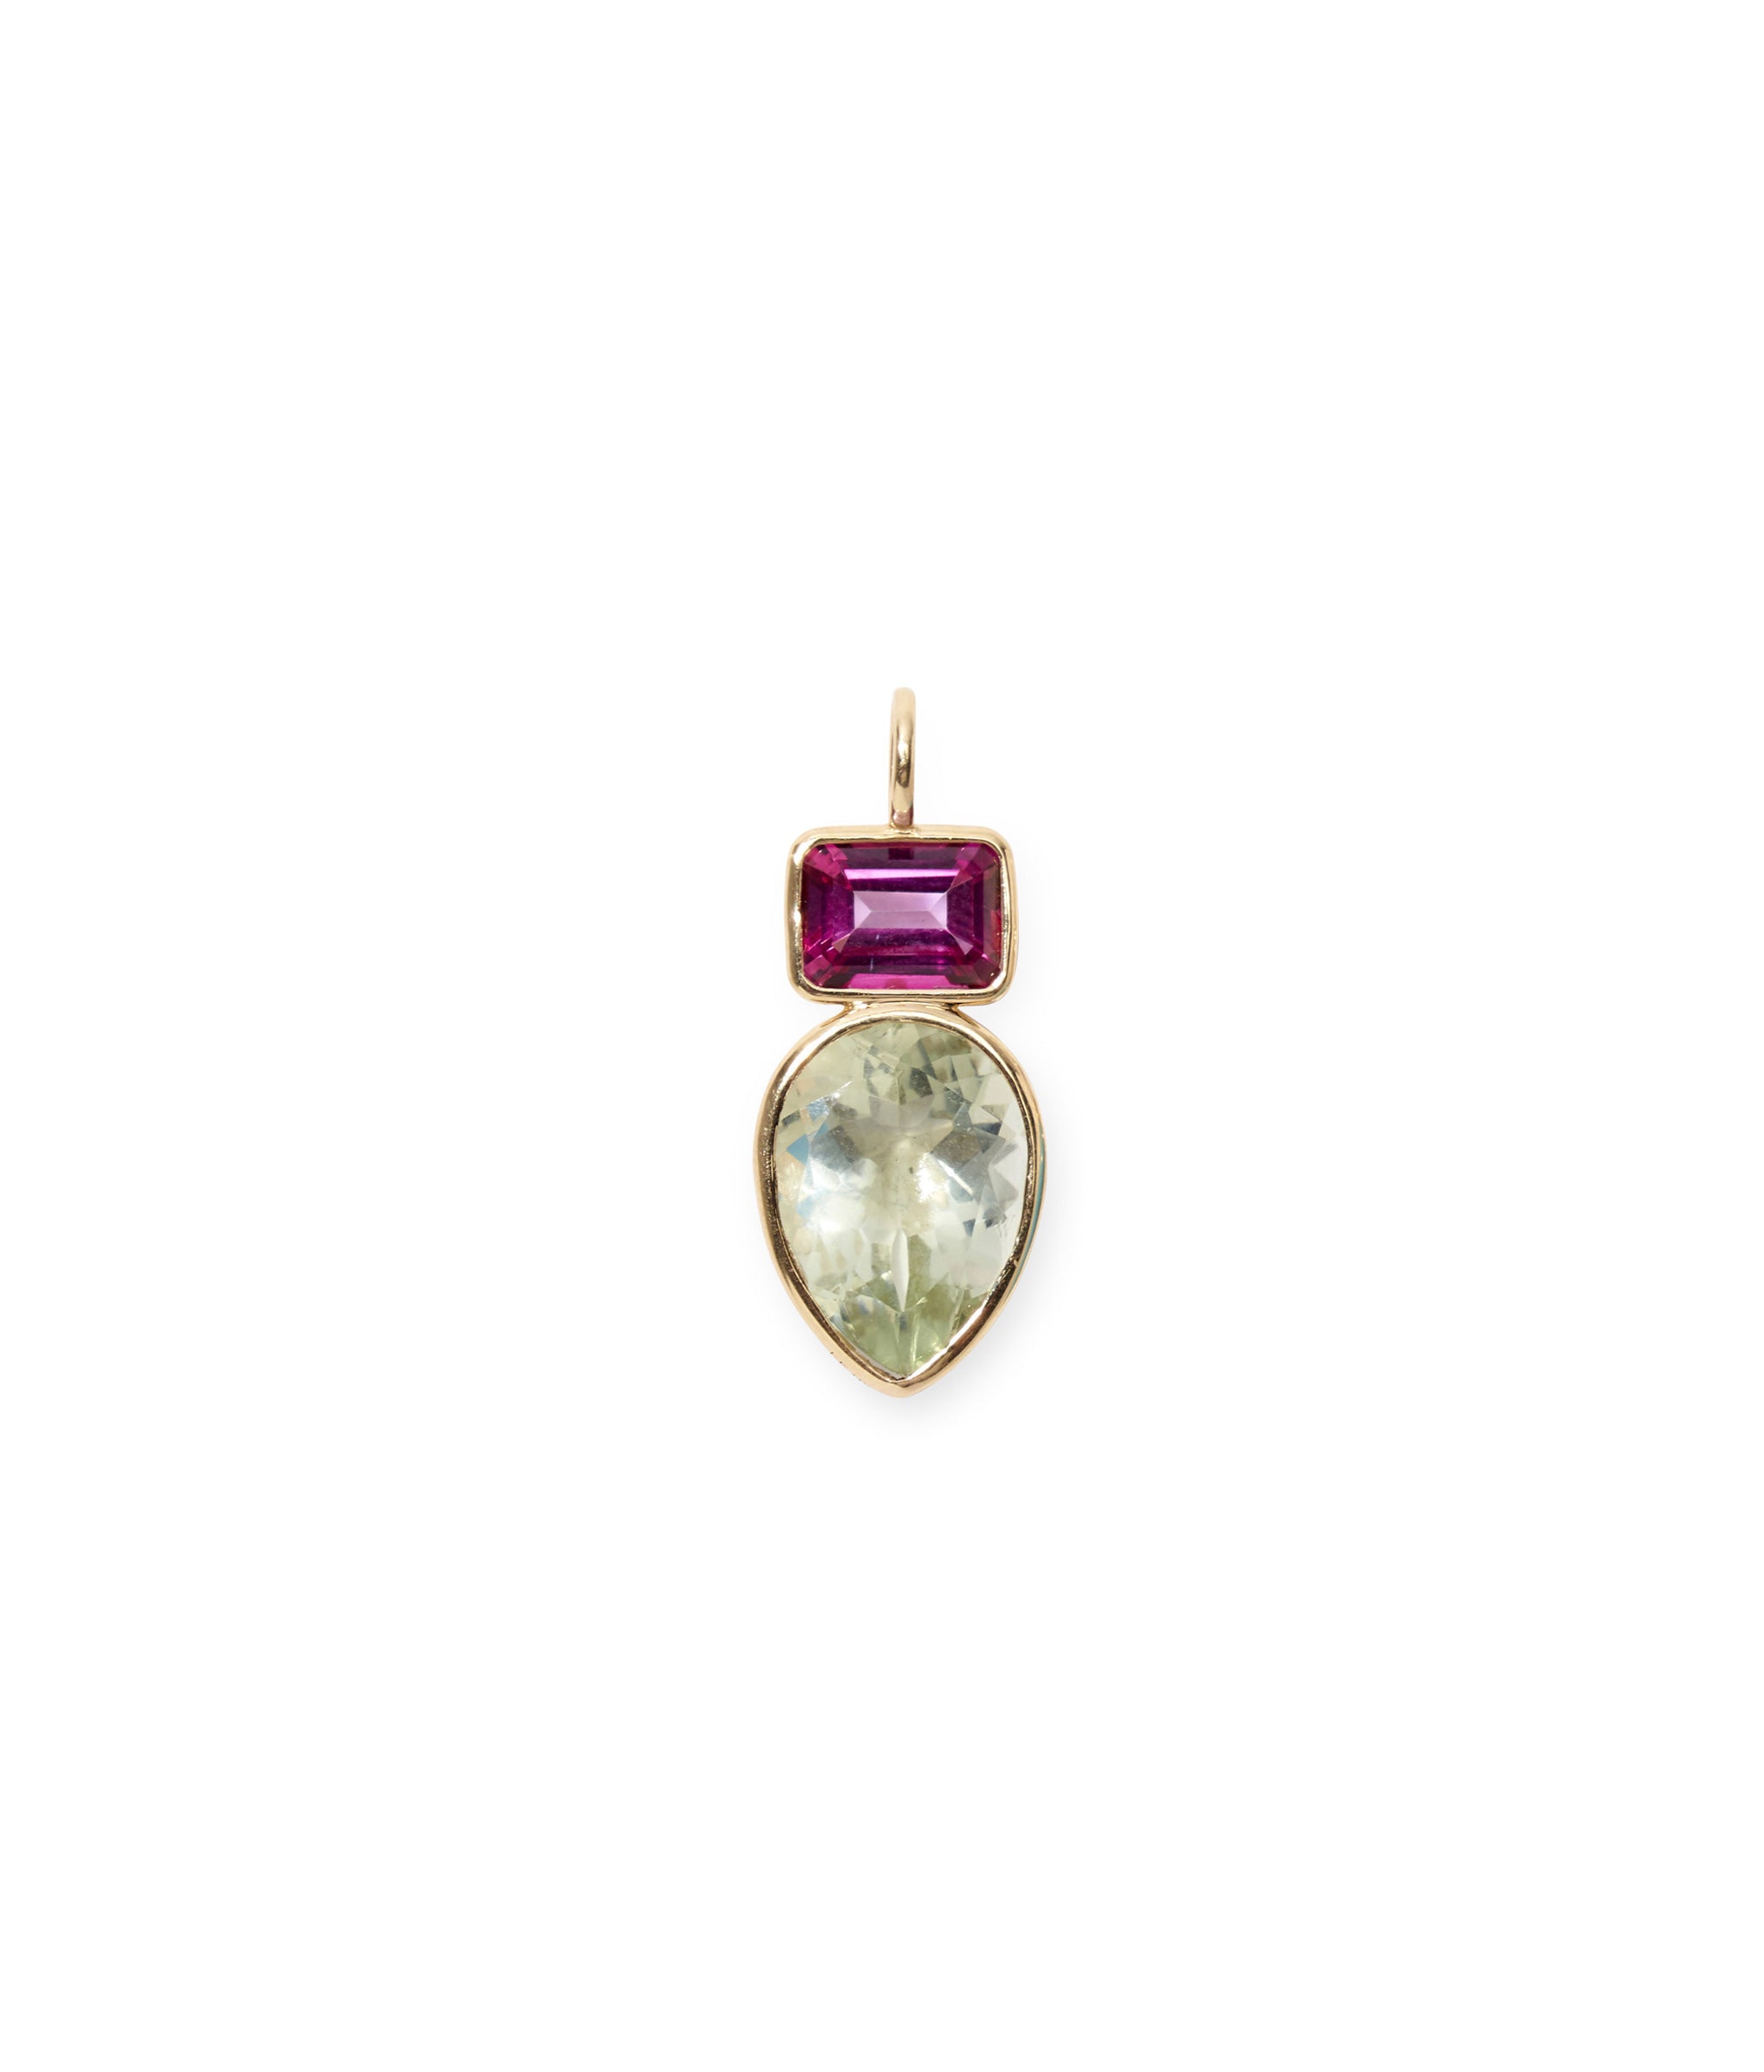 Pink Topaz & Green Amethyst Teardrop 14k Gold Necklace Charm. Faceted pink topaz baguette and green amethyst teardrop